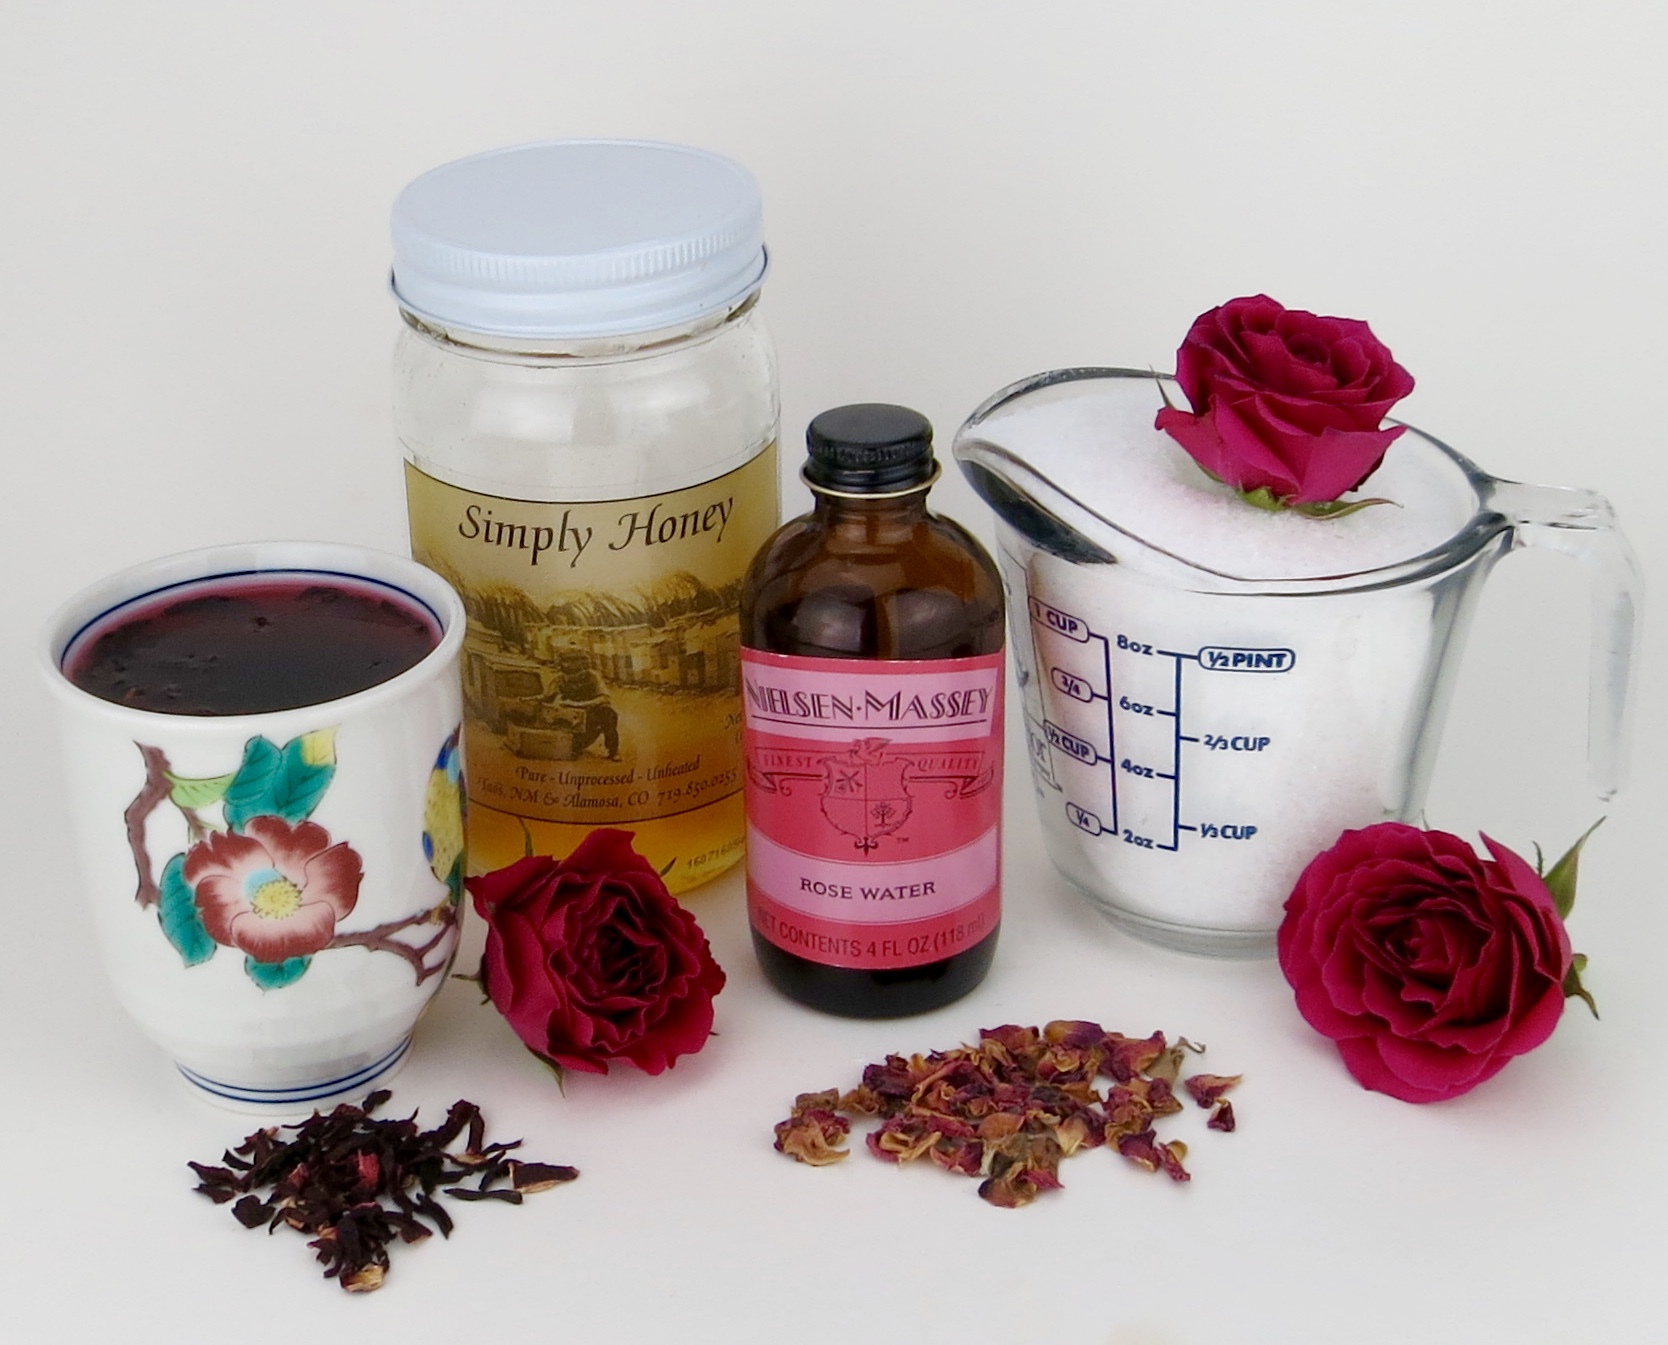 Sweet Rose Hibiscus Honey Bath – A Calming Detox Treat!